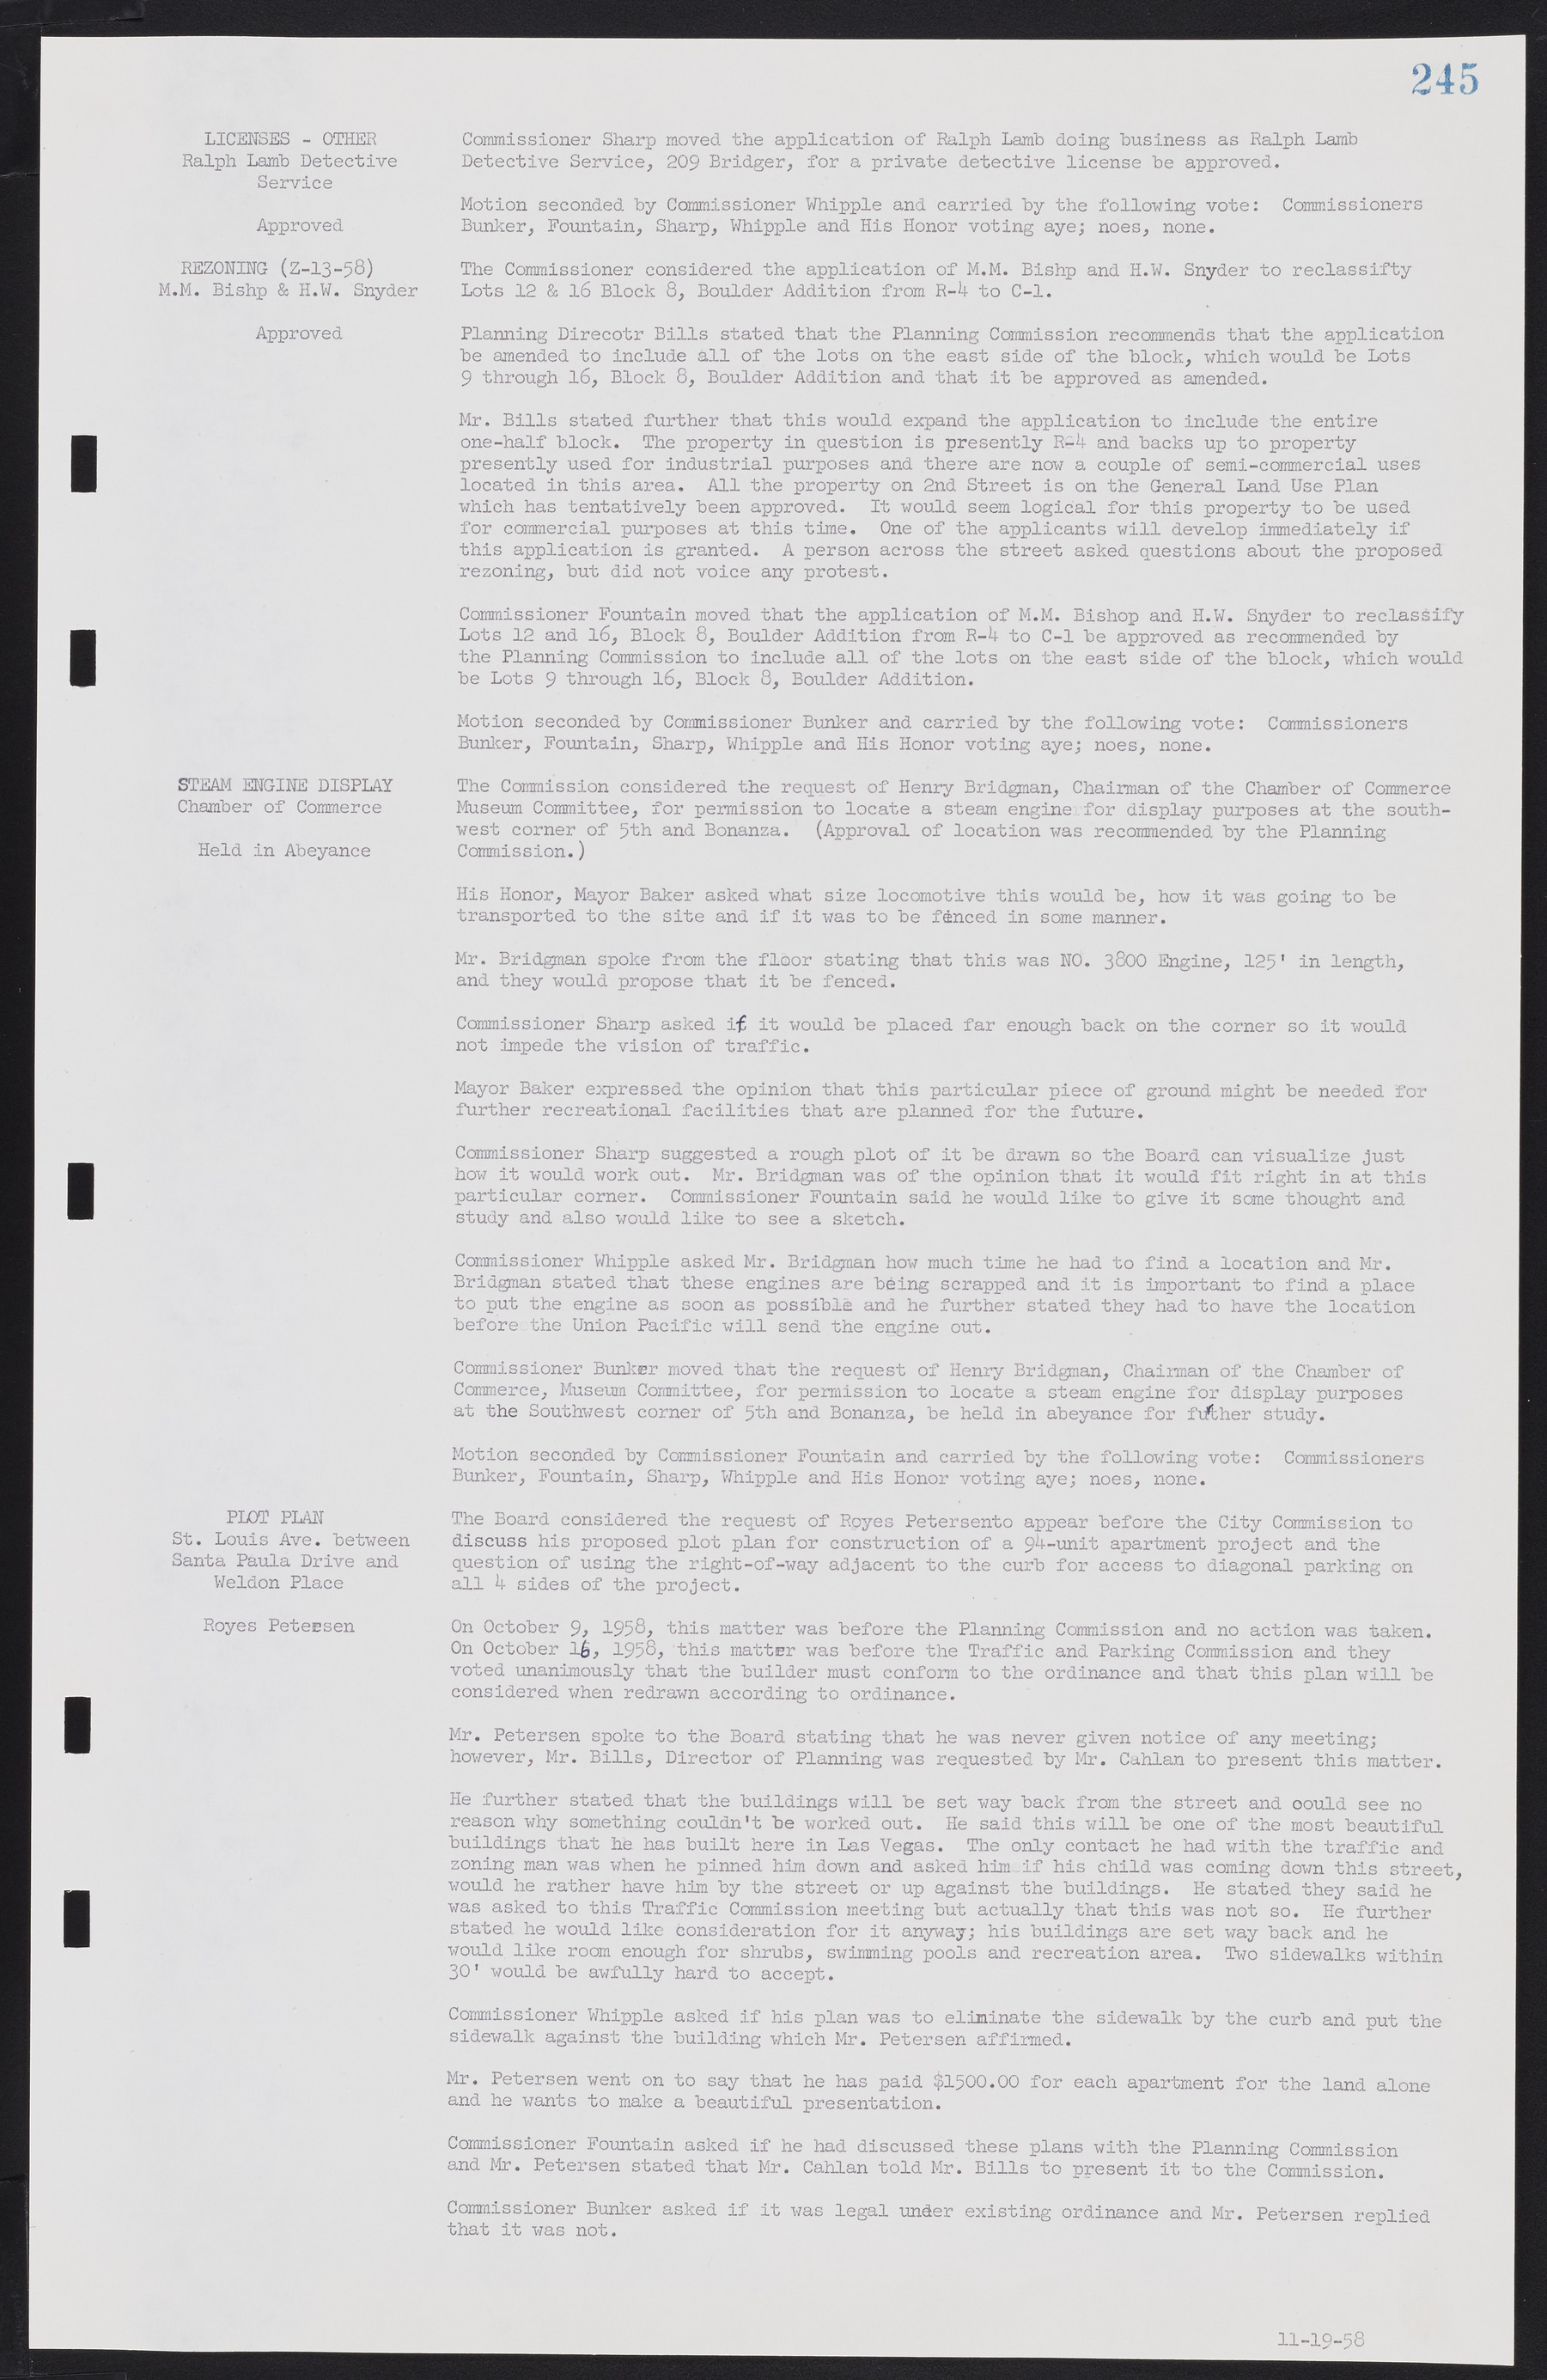 Las Vegas City Commission Minutes, November 20, 1957 to December 2, 1959, lvc000011-253